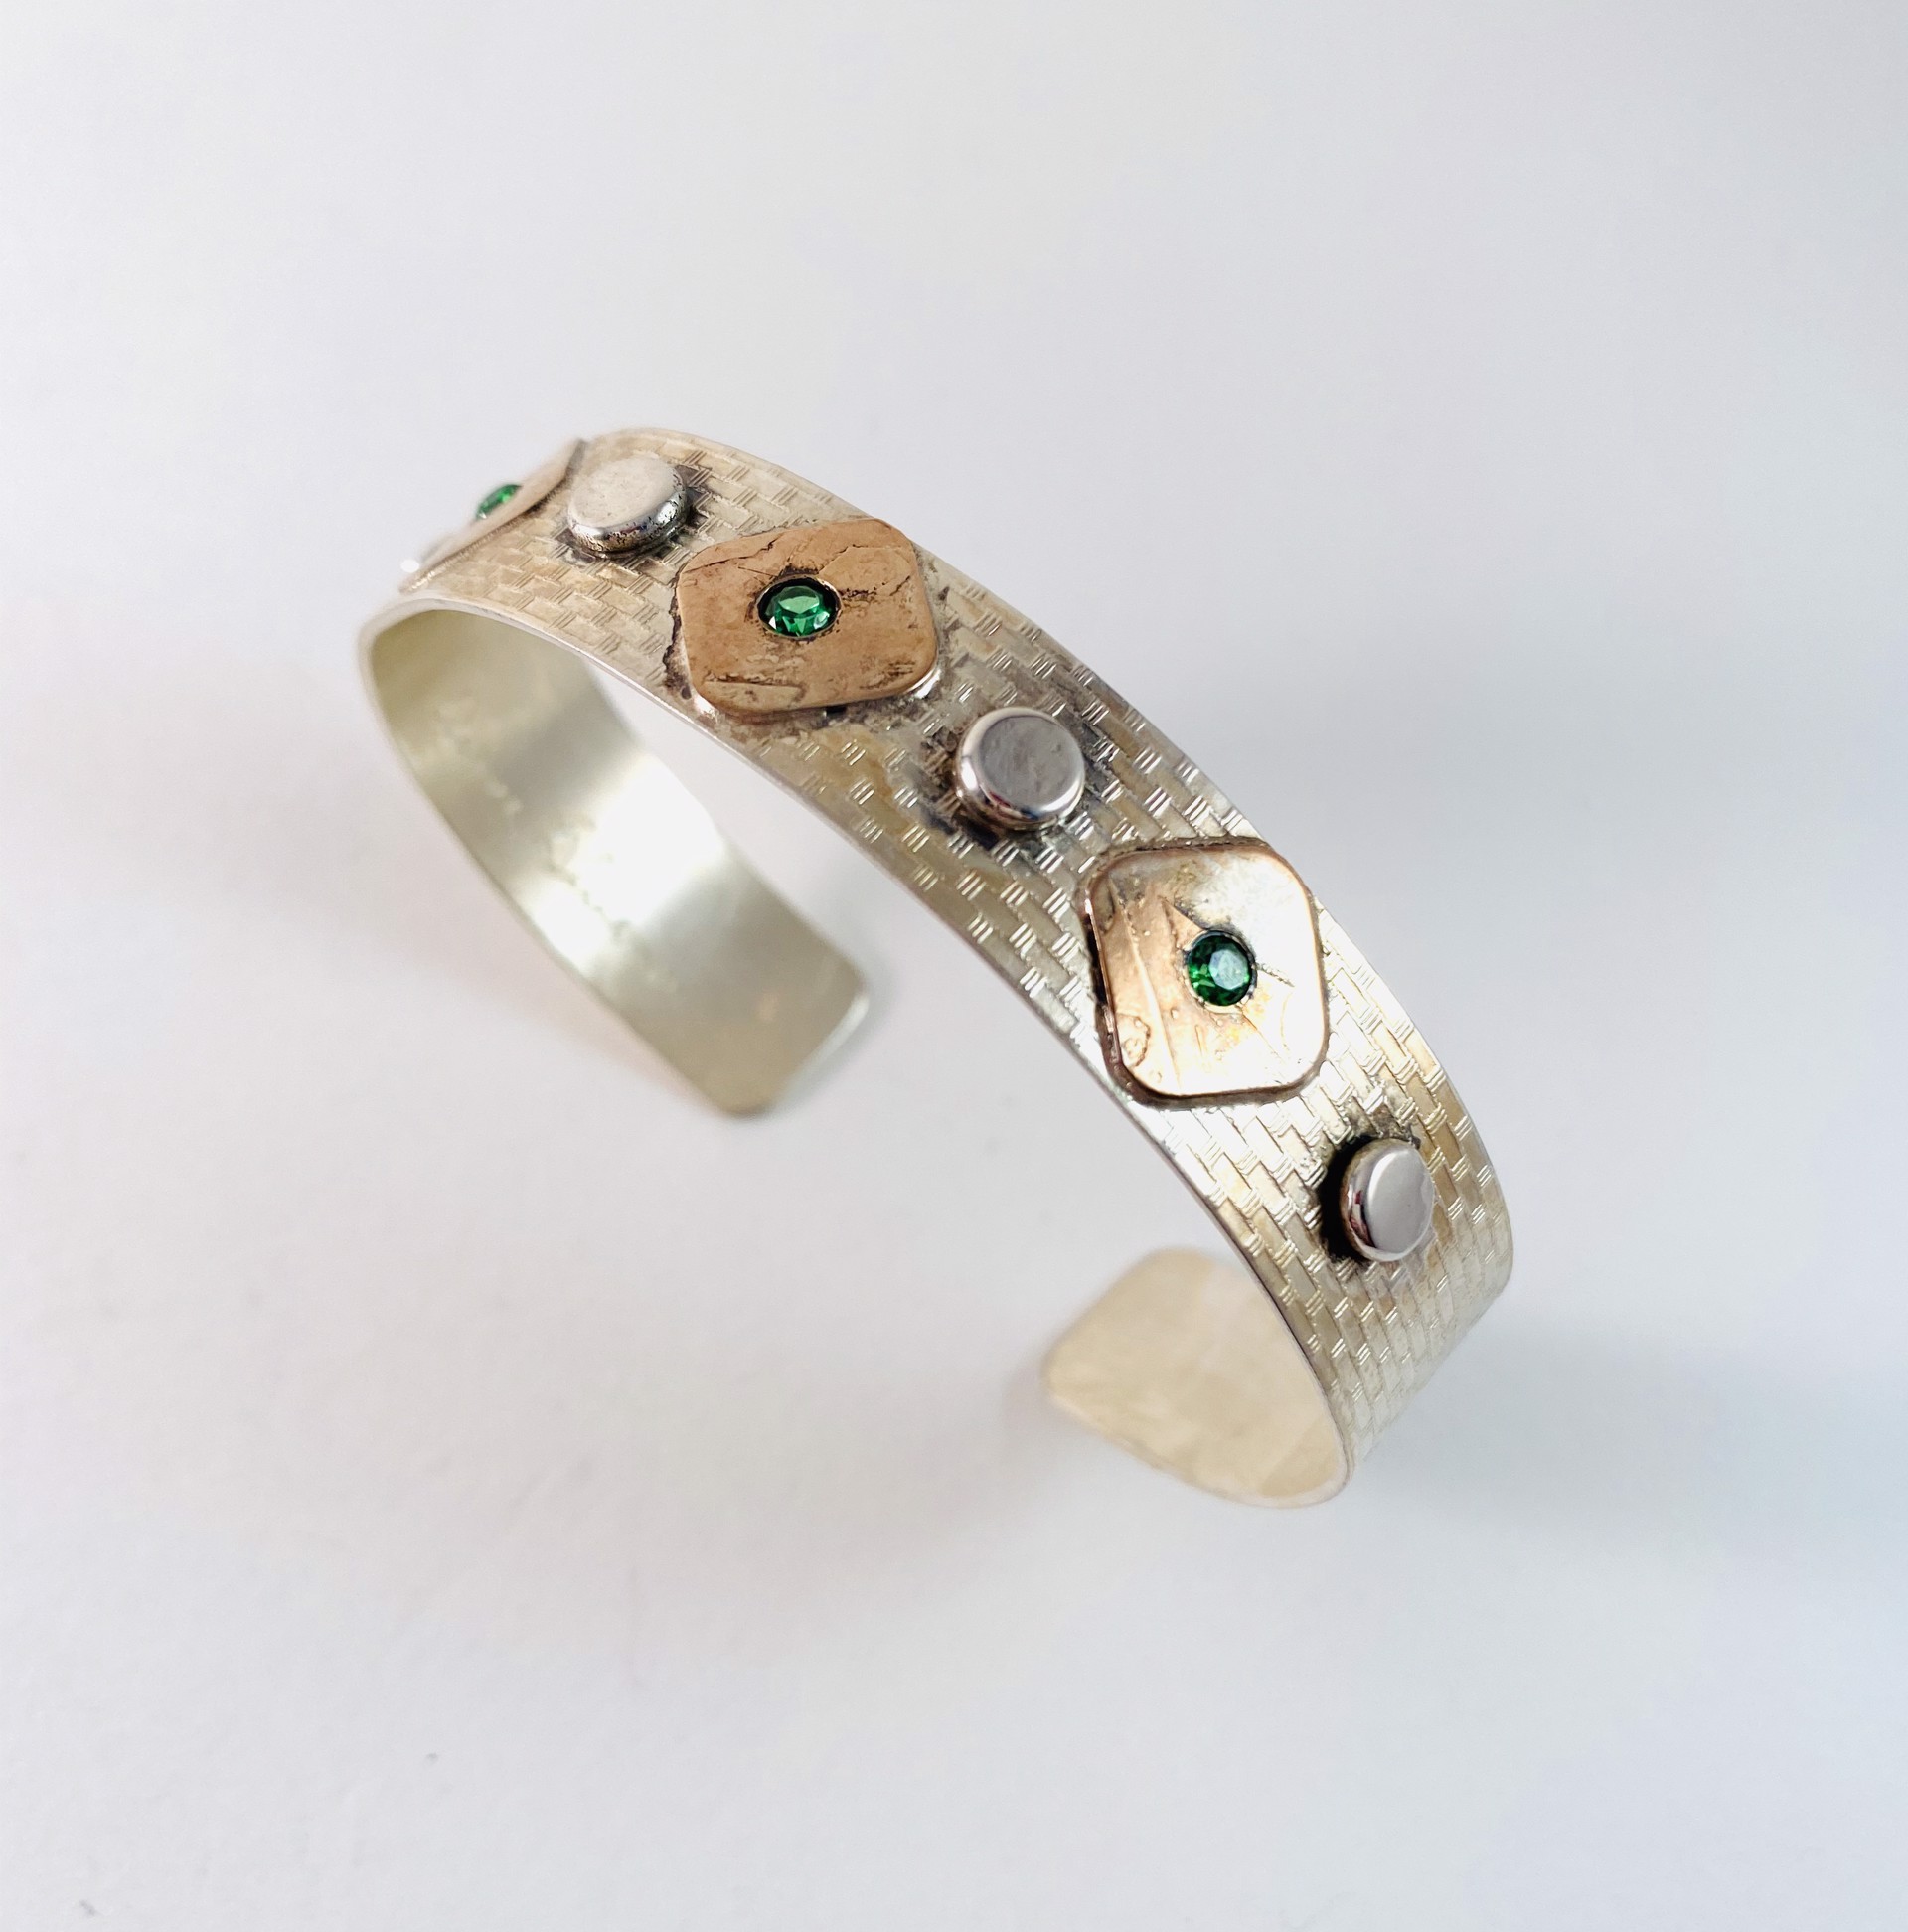 Silver, Bronze, lab created Emerald Cuff Bracelet, #153 by Anne Bivens